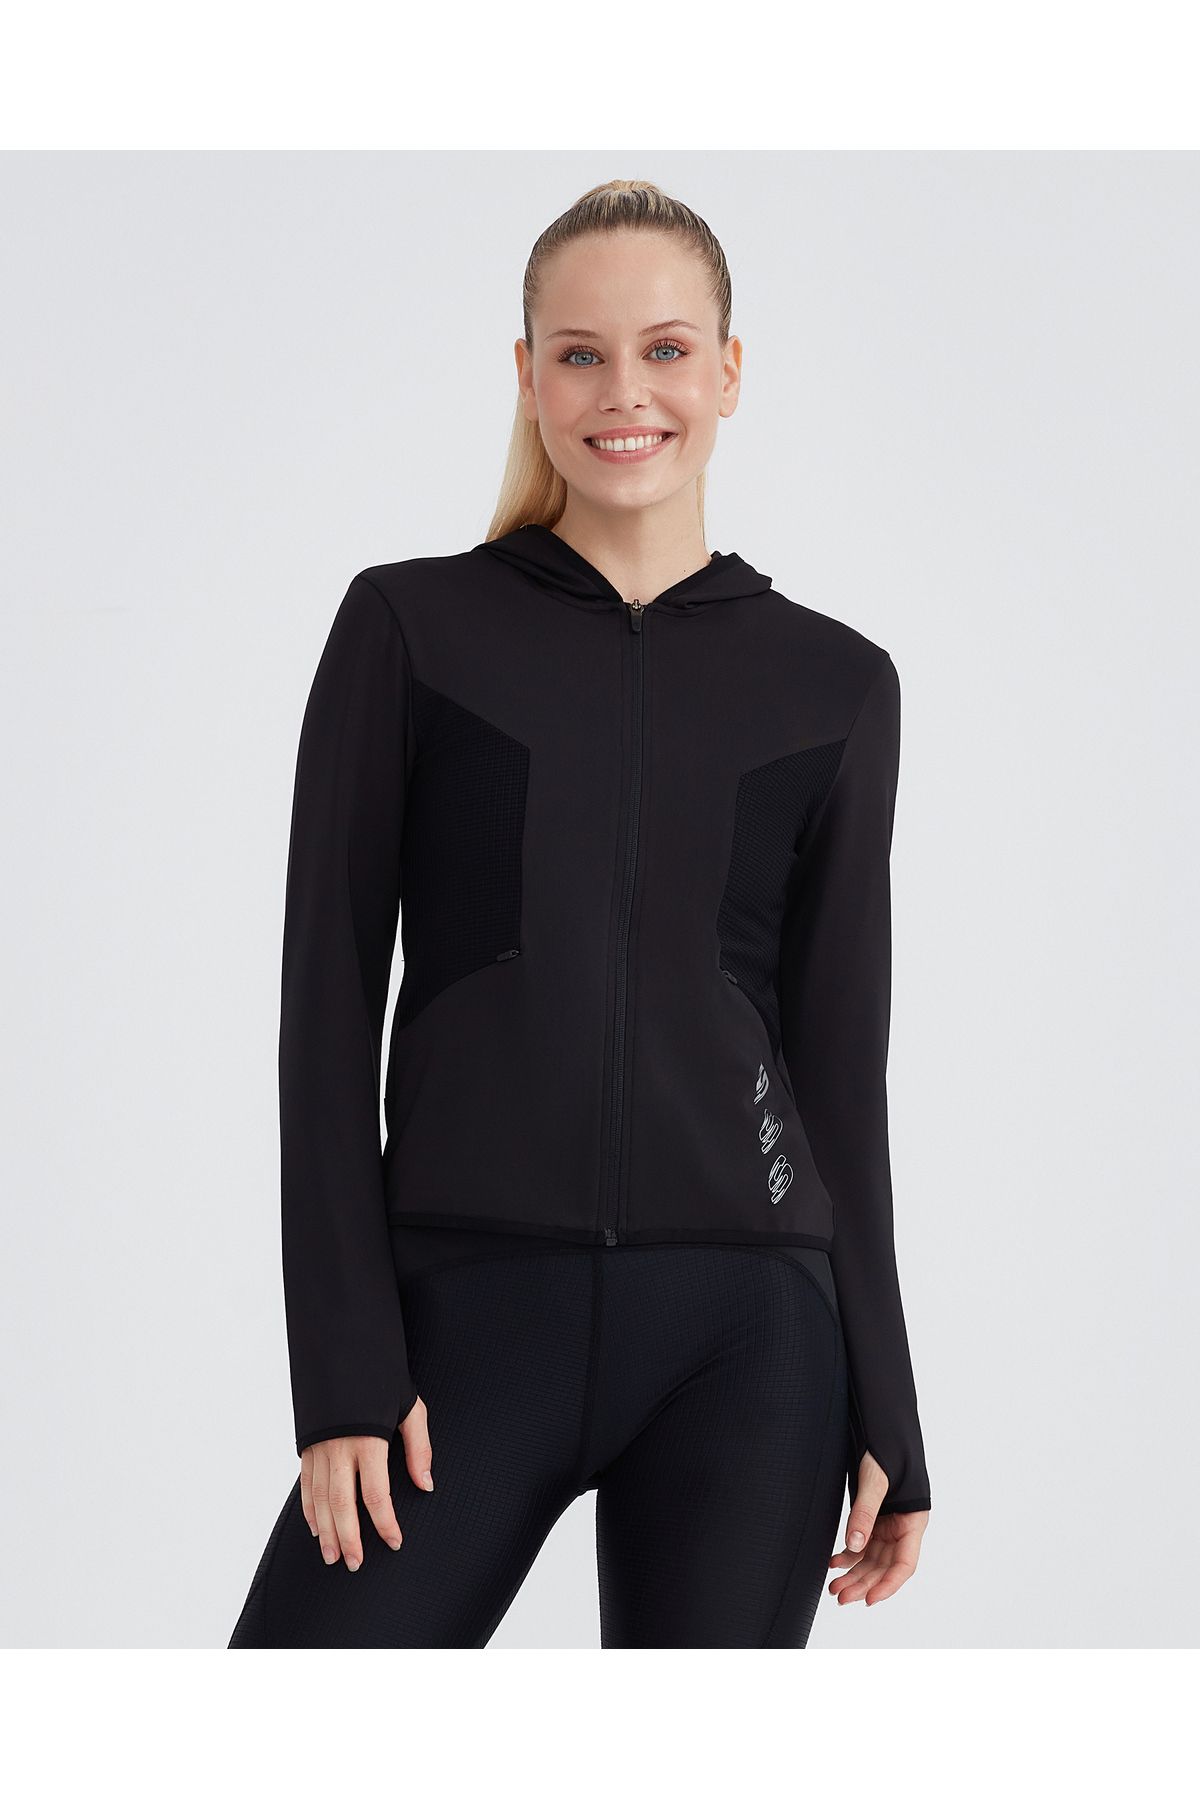 Skechers W Performance Coll. Full Zip Sweatshirt Kadın Siyah Sweatshirt S232270-001